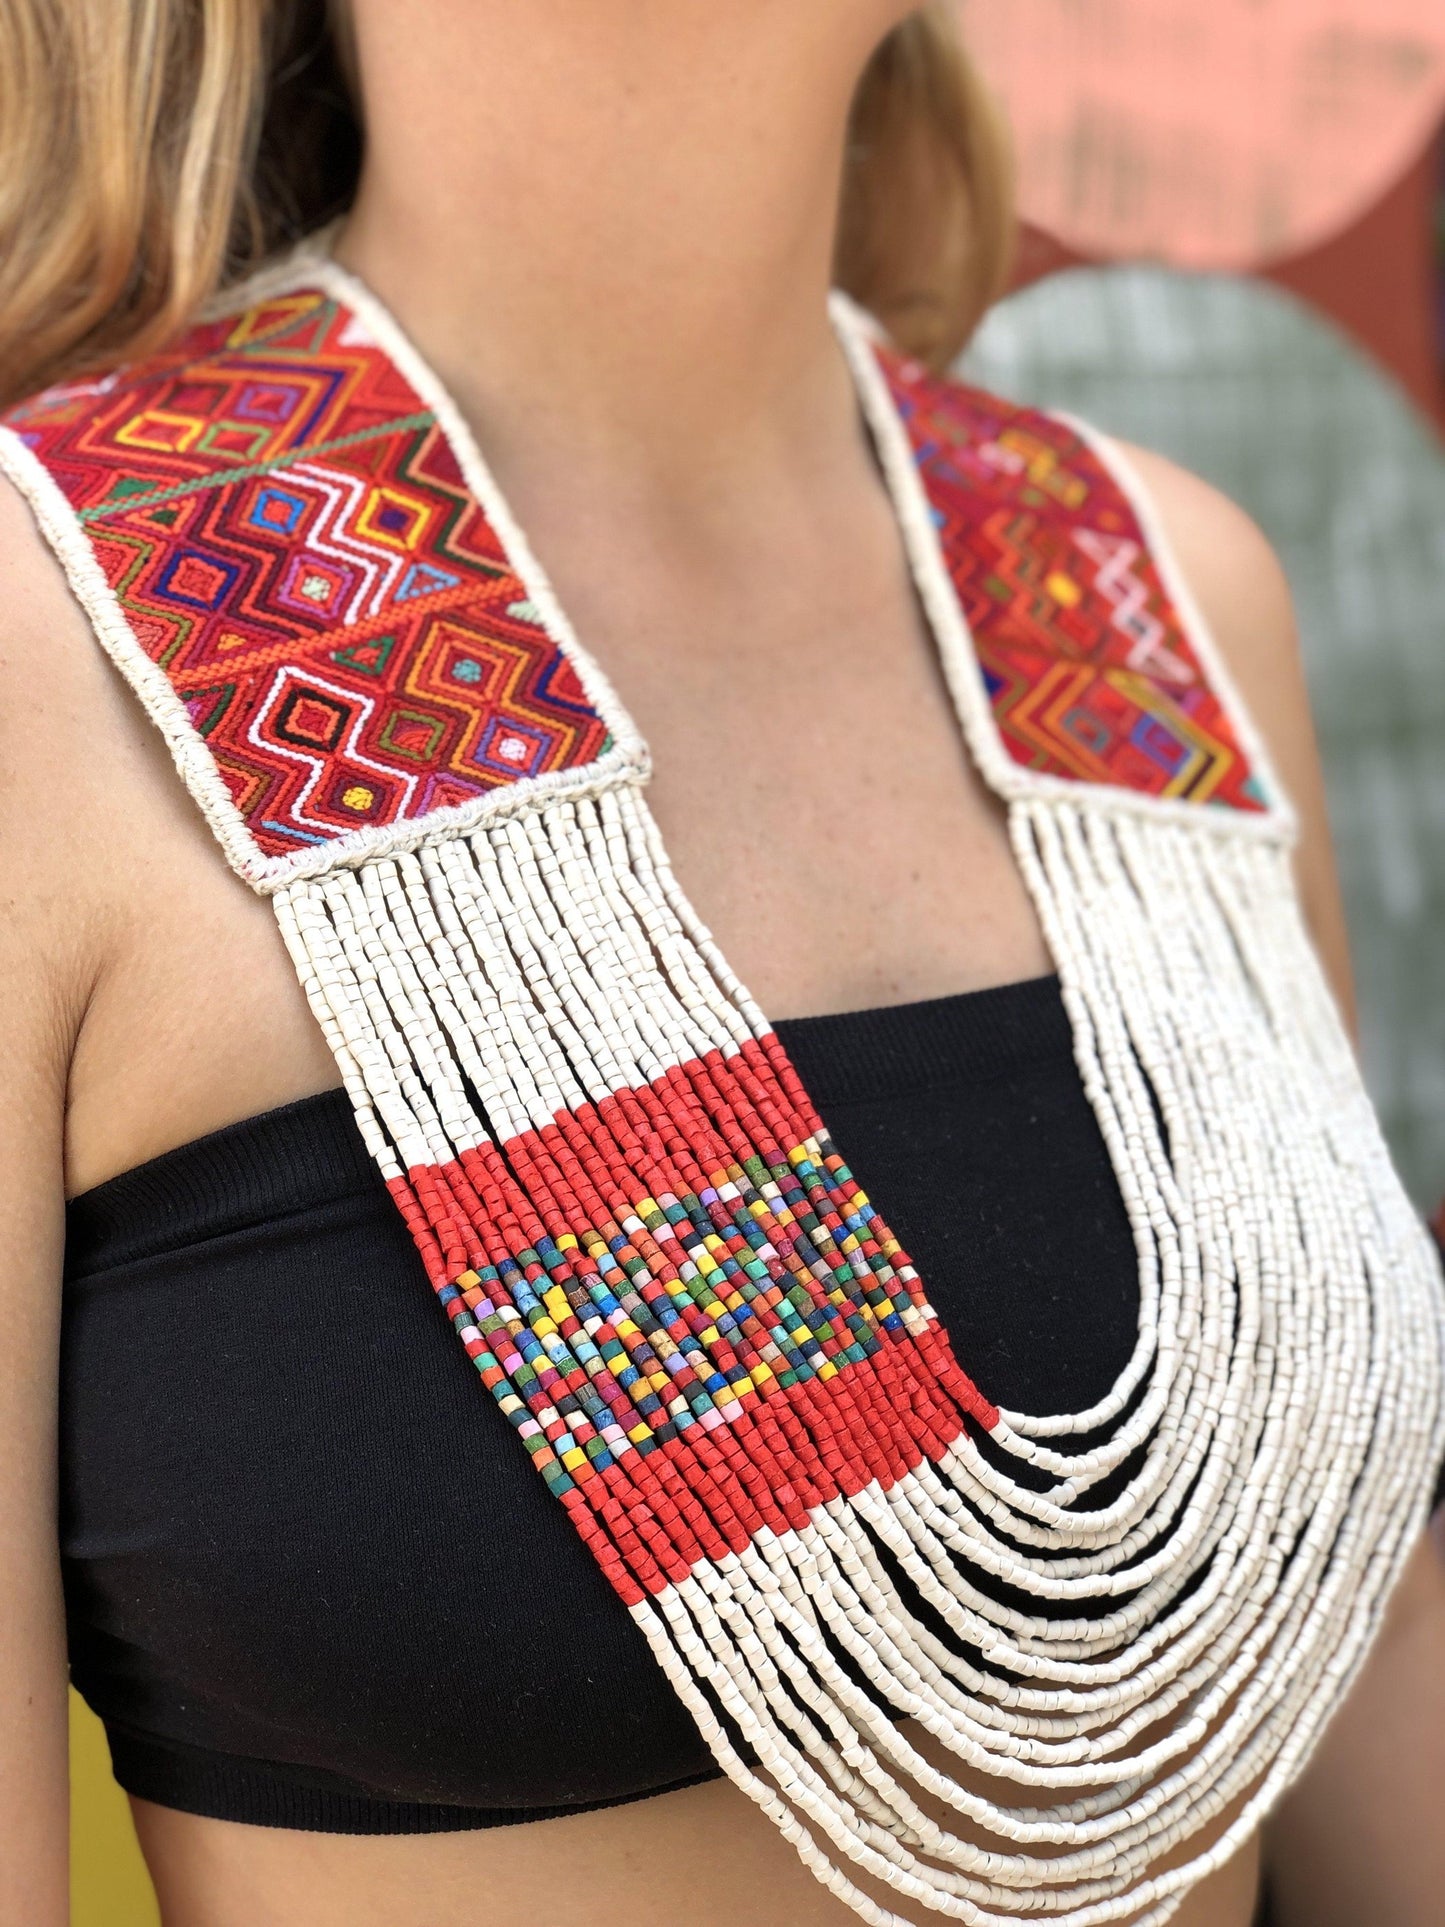 Pecheras Textiles Ceremoniales - "Aguacatán"